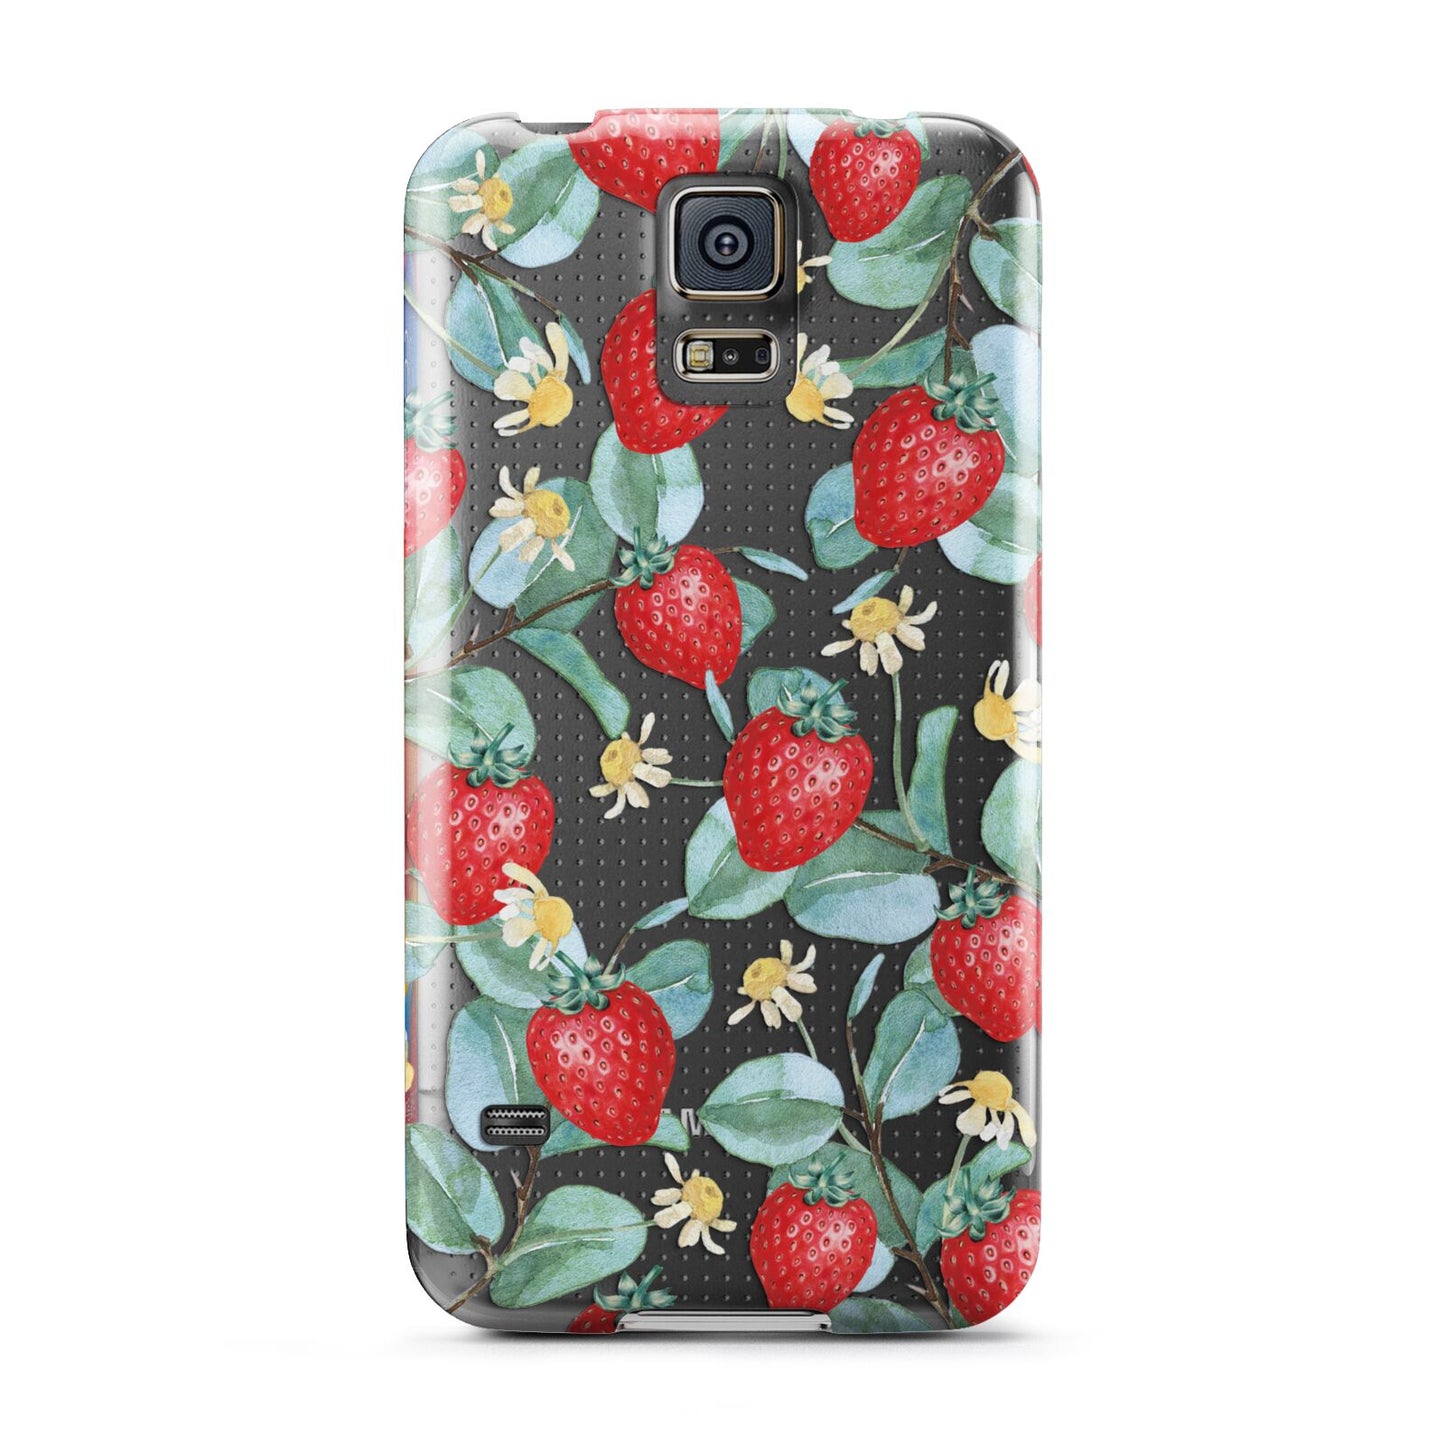 Strawberry Plant Samsung Galaxy S5 Case